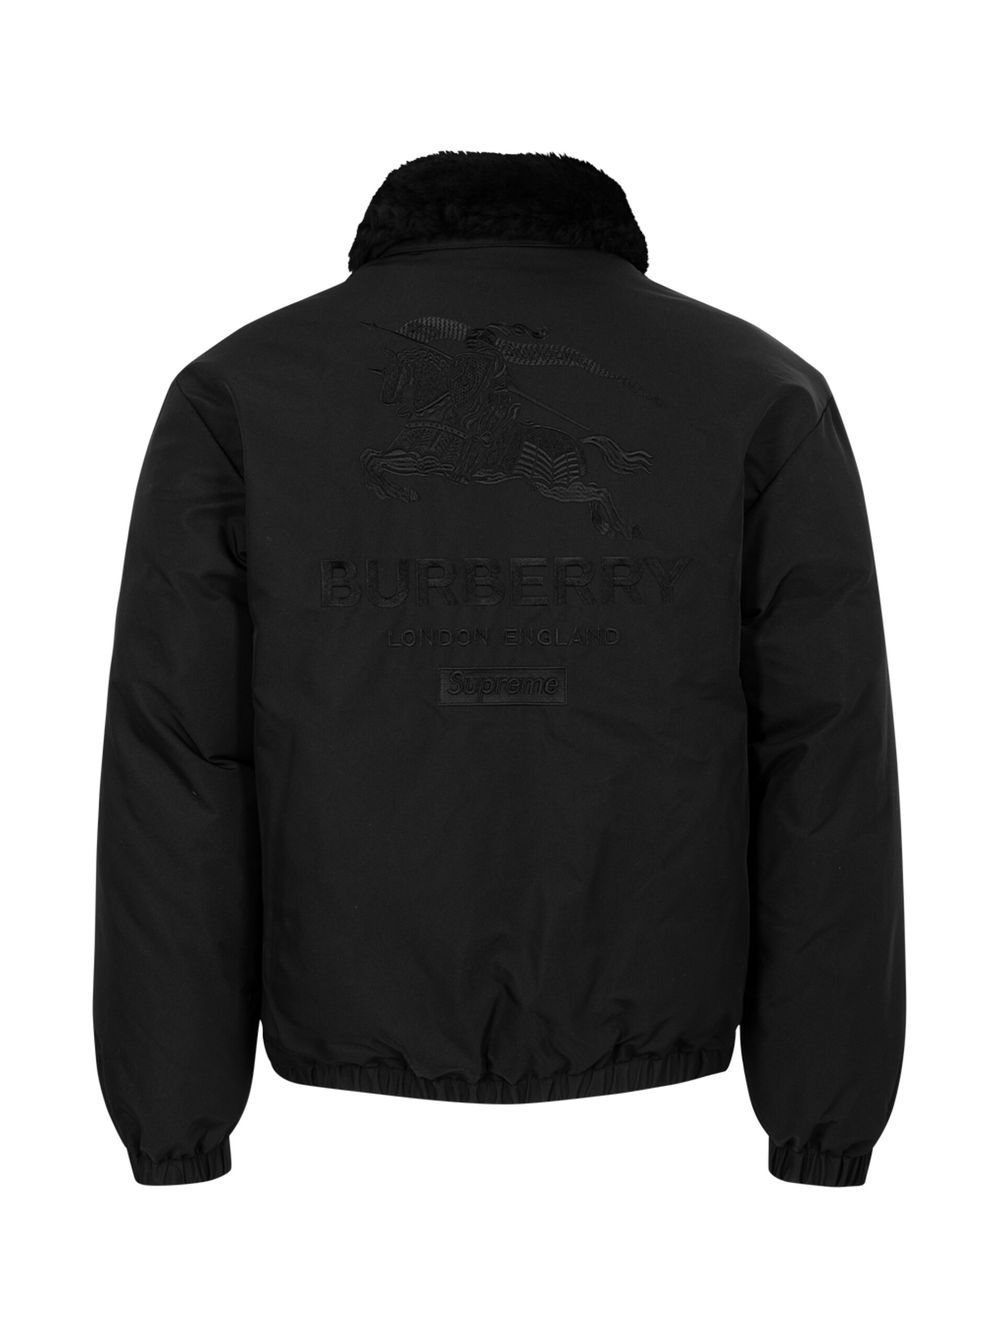 Supreme x Burberry Shearling Collar Down Puffer Jacket - Farfetch